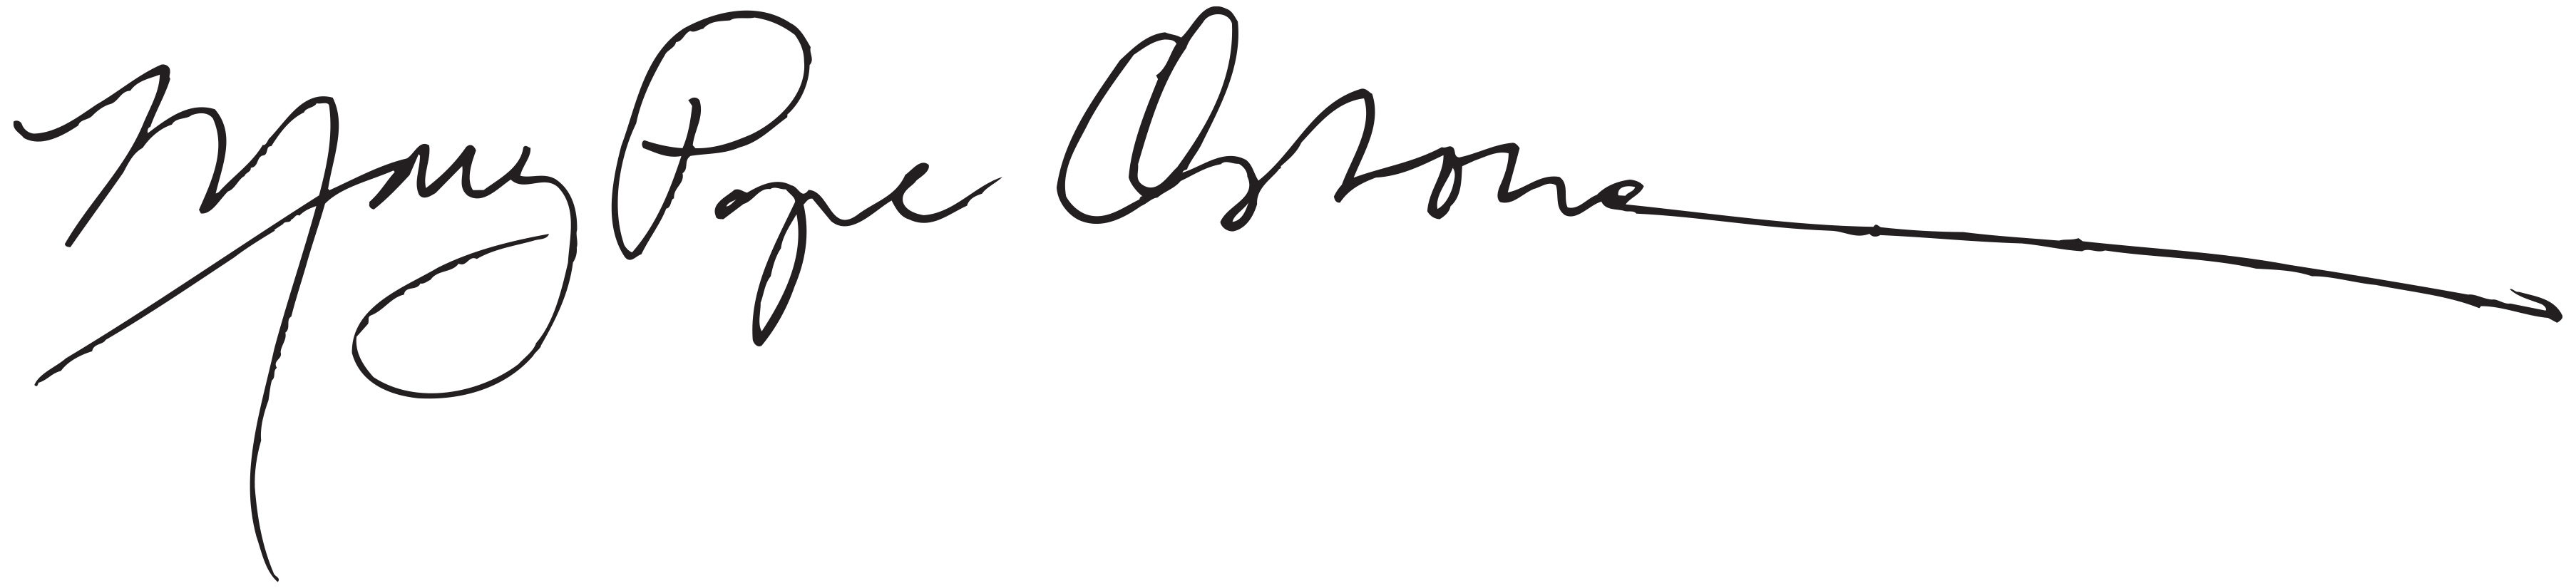 Mary Pope Osborne signature